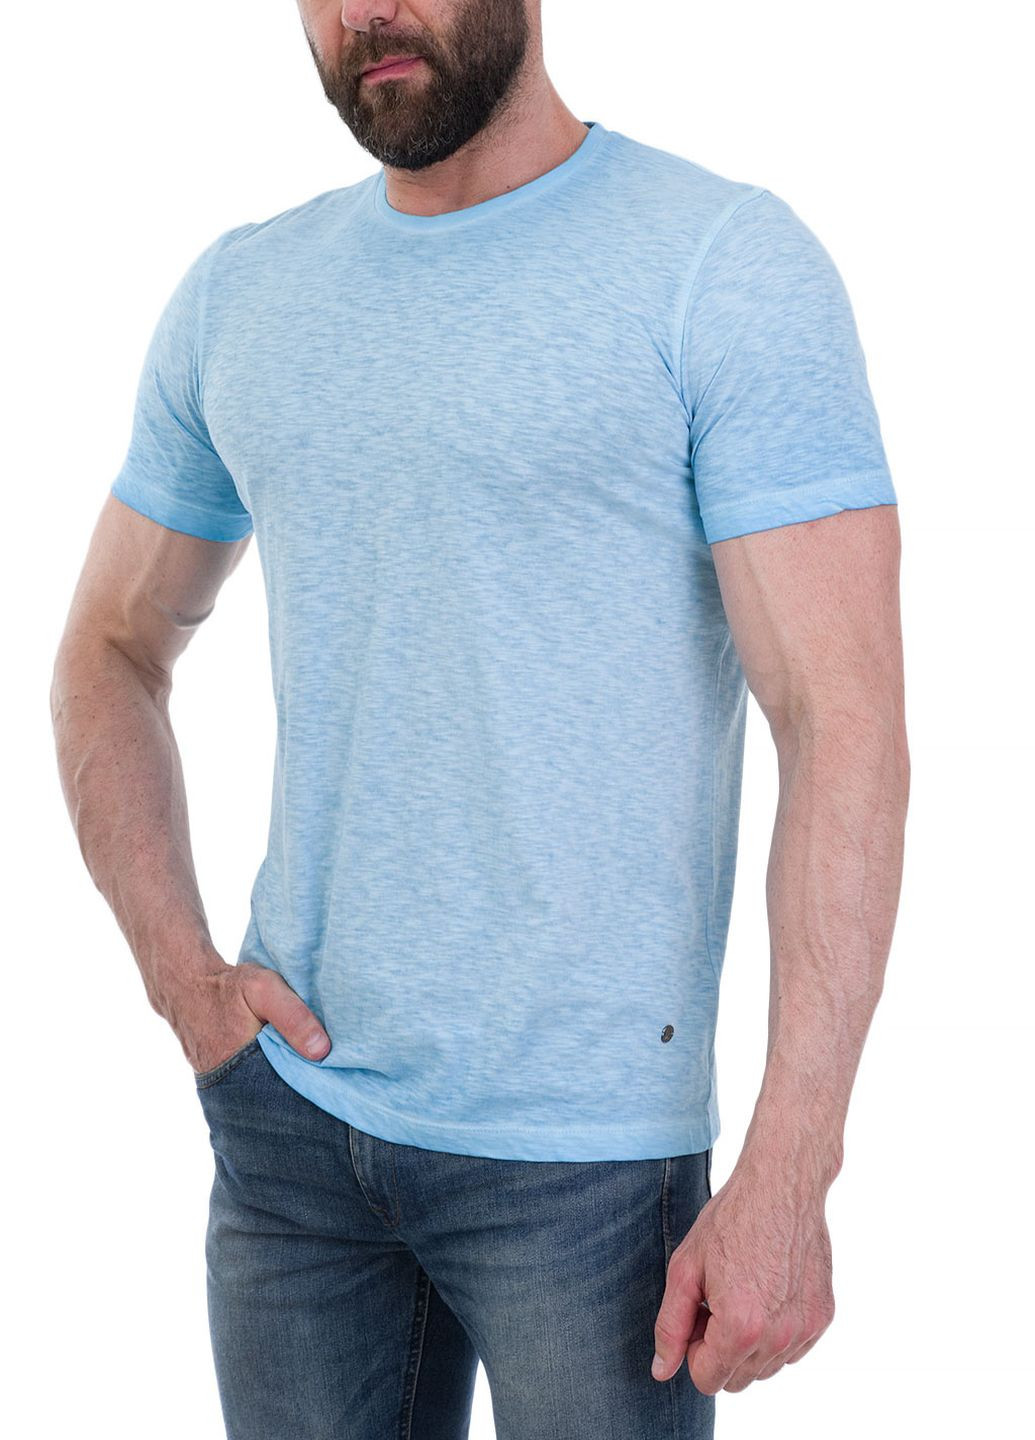 Голубая футболка Ragman